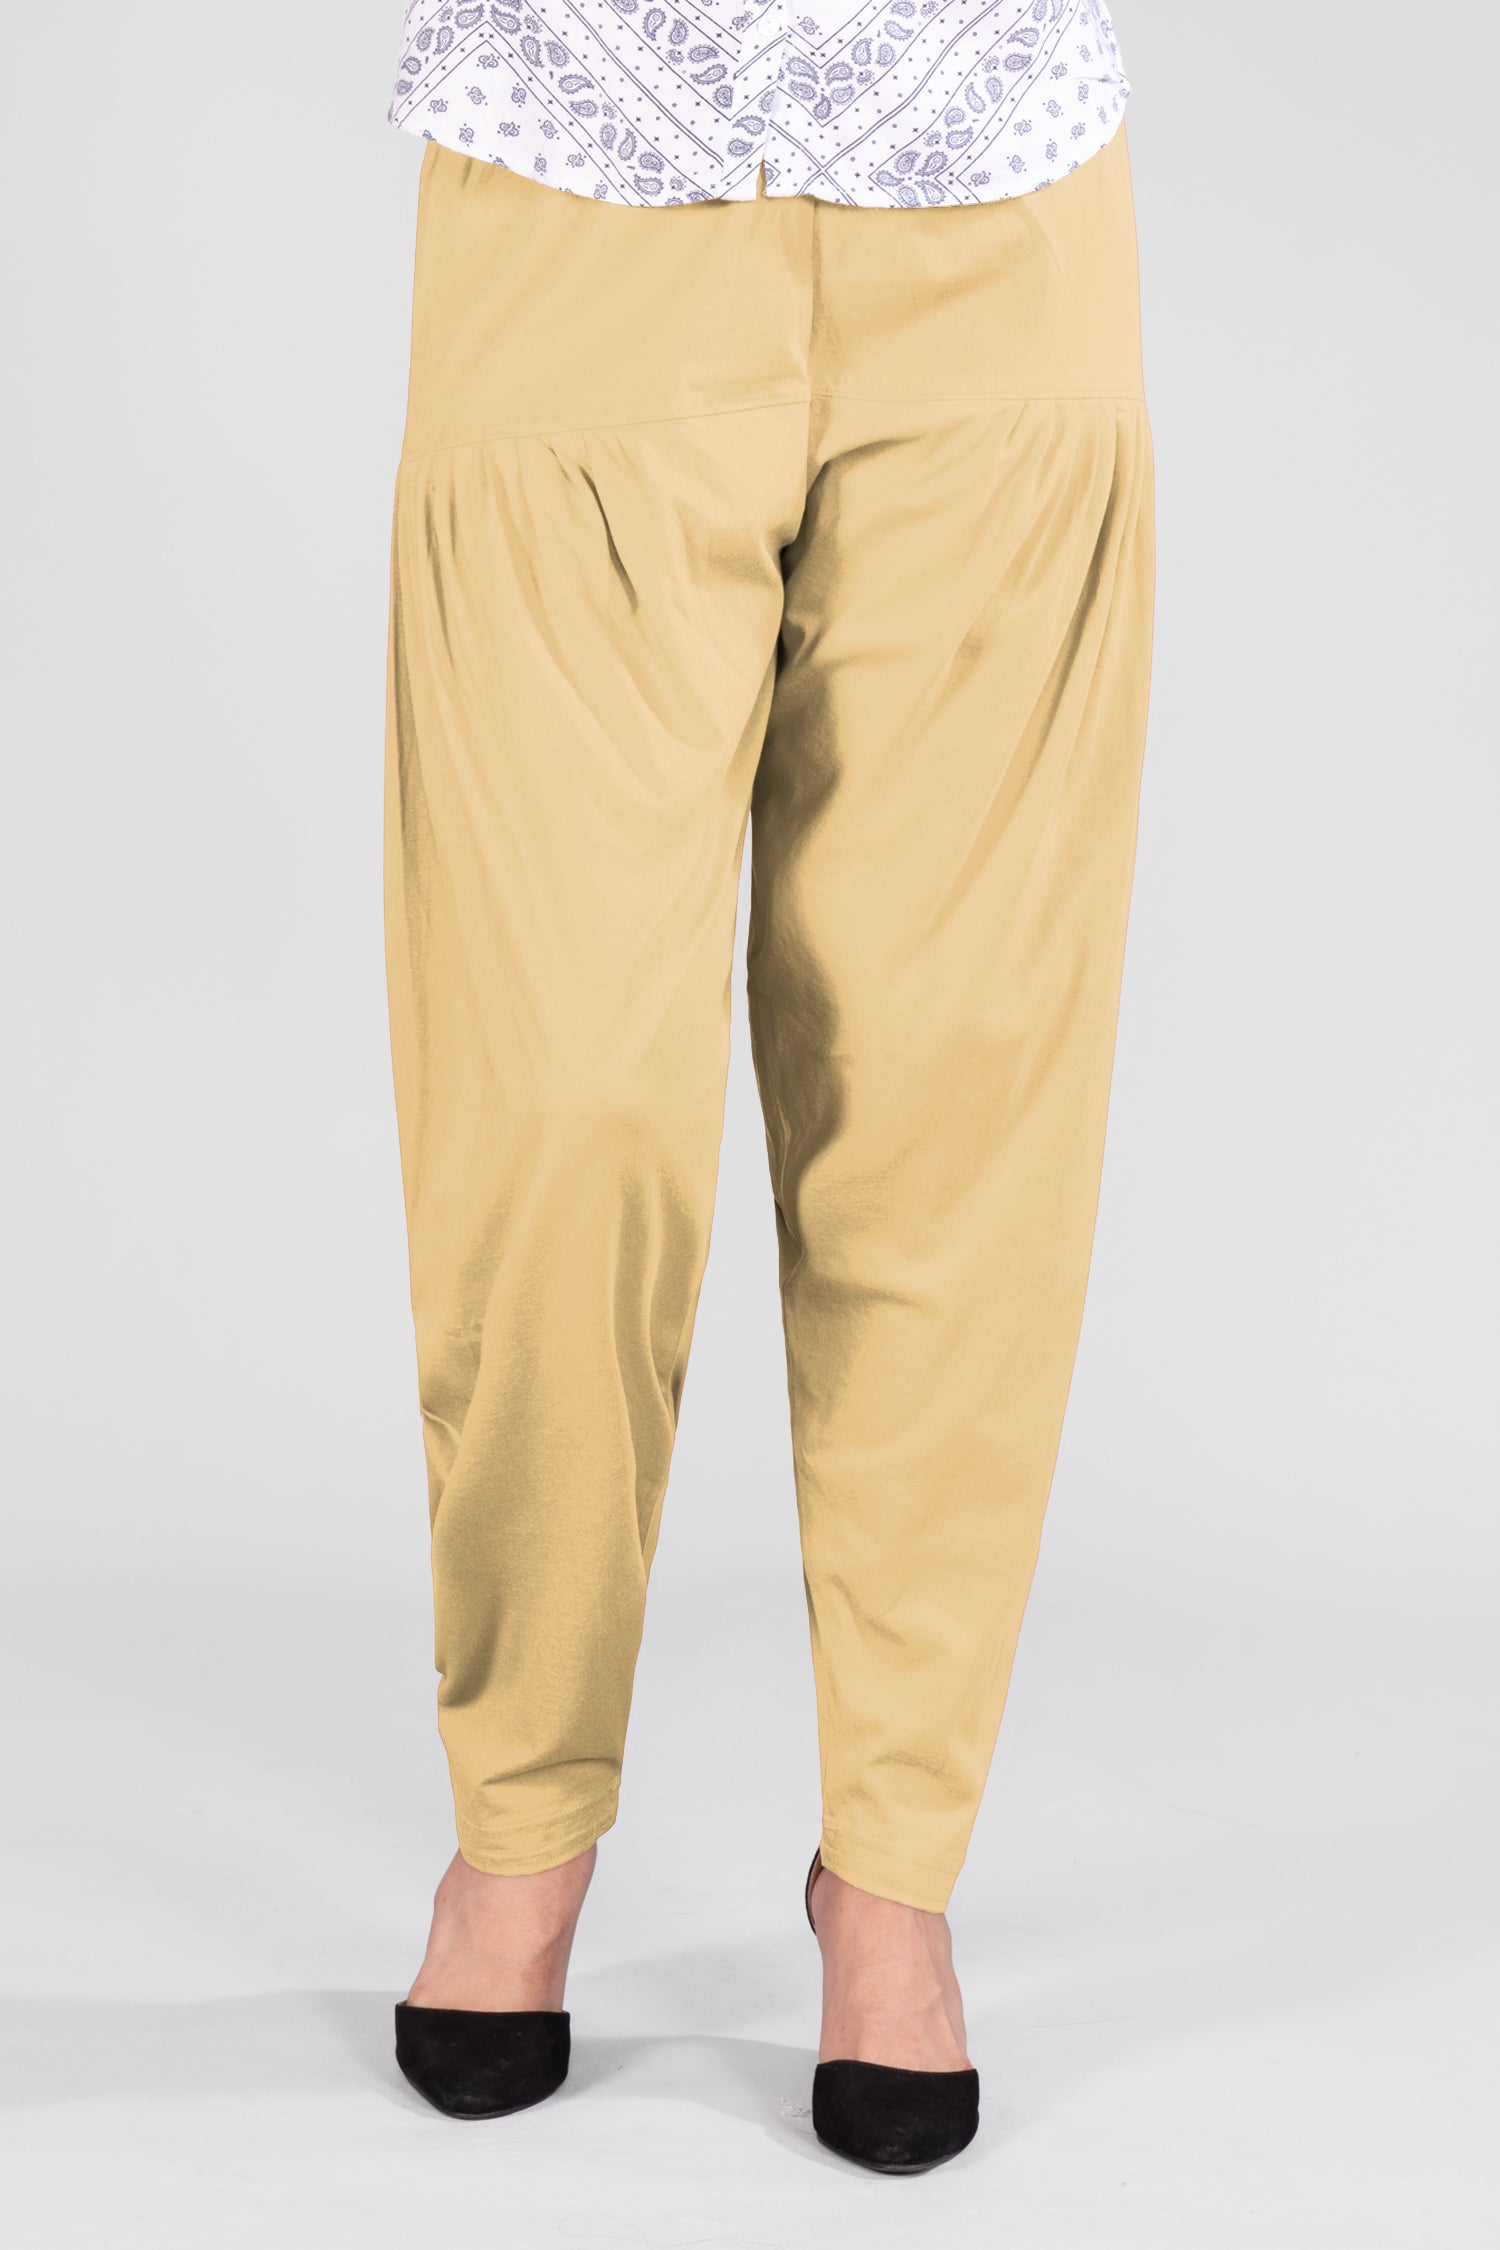 Striped Straight Pants (Skintone) - Shop Ismiq Men's Pants - Pinkoi